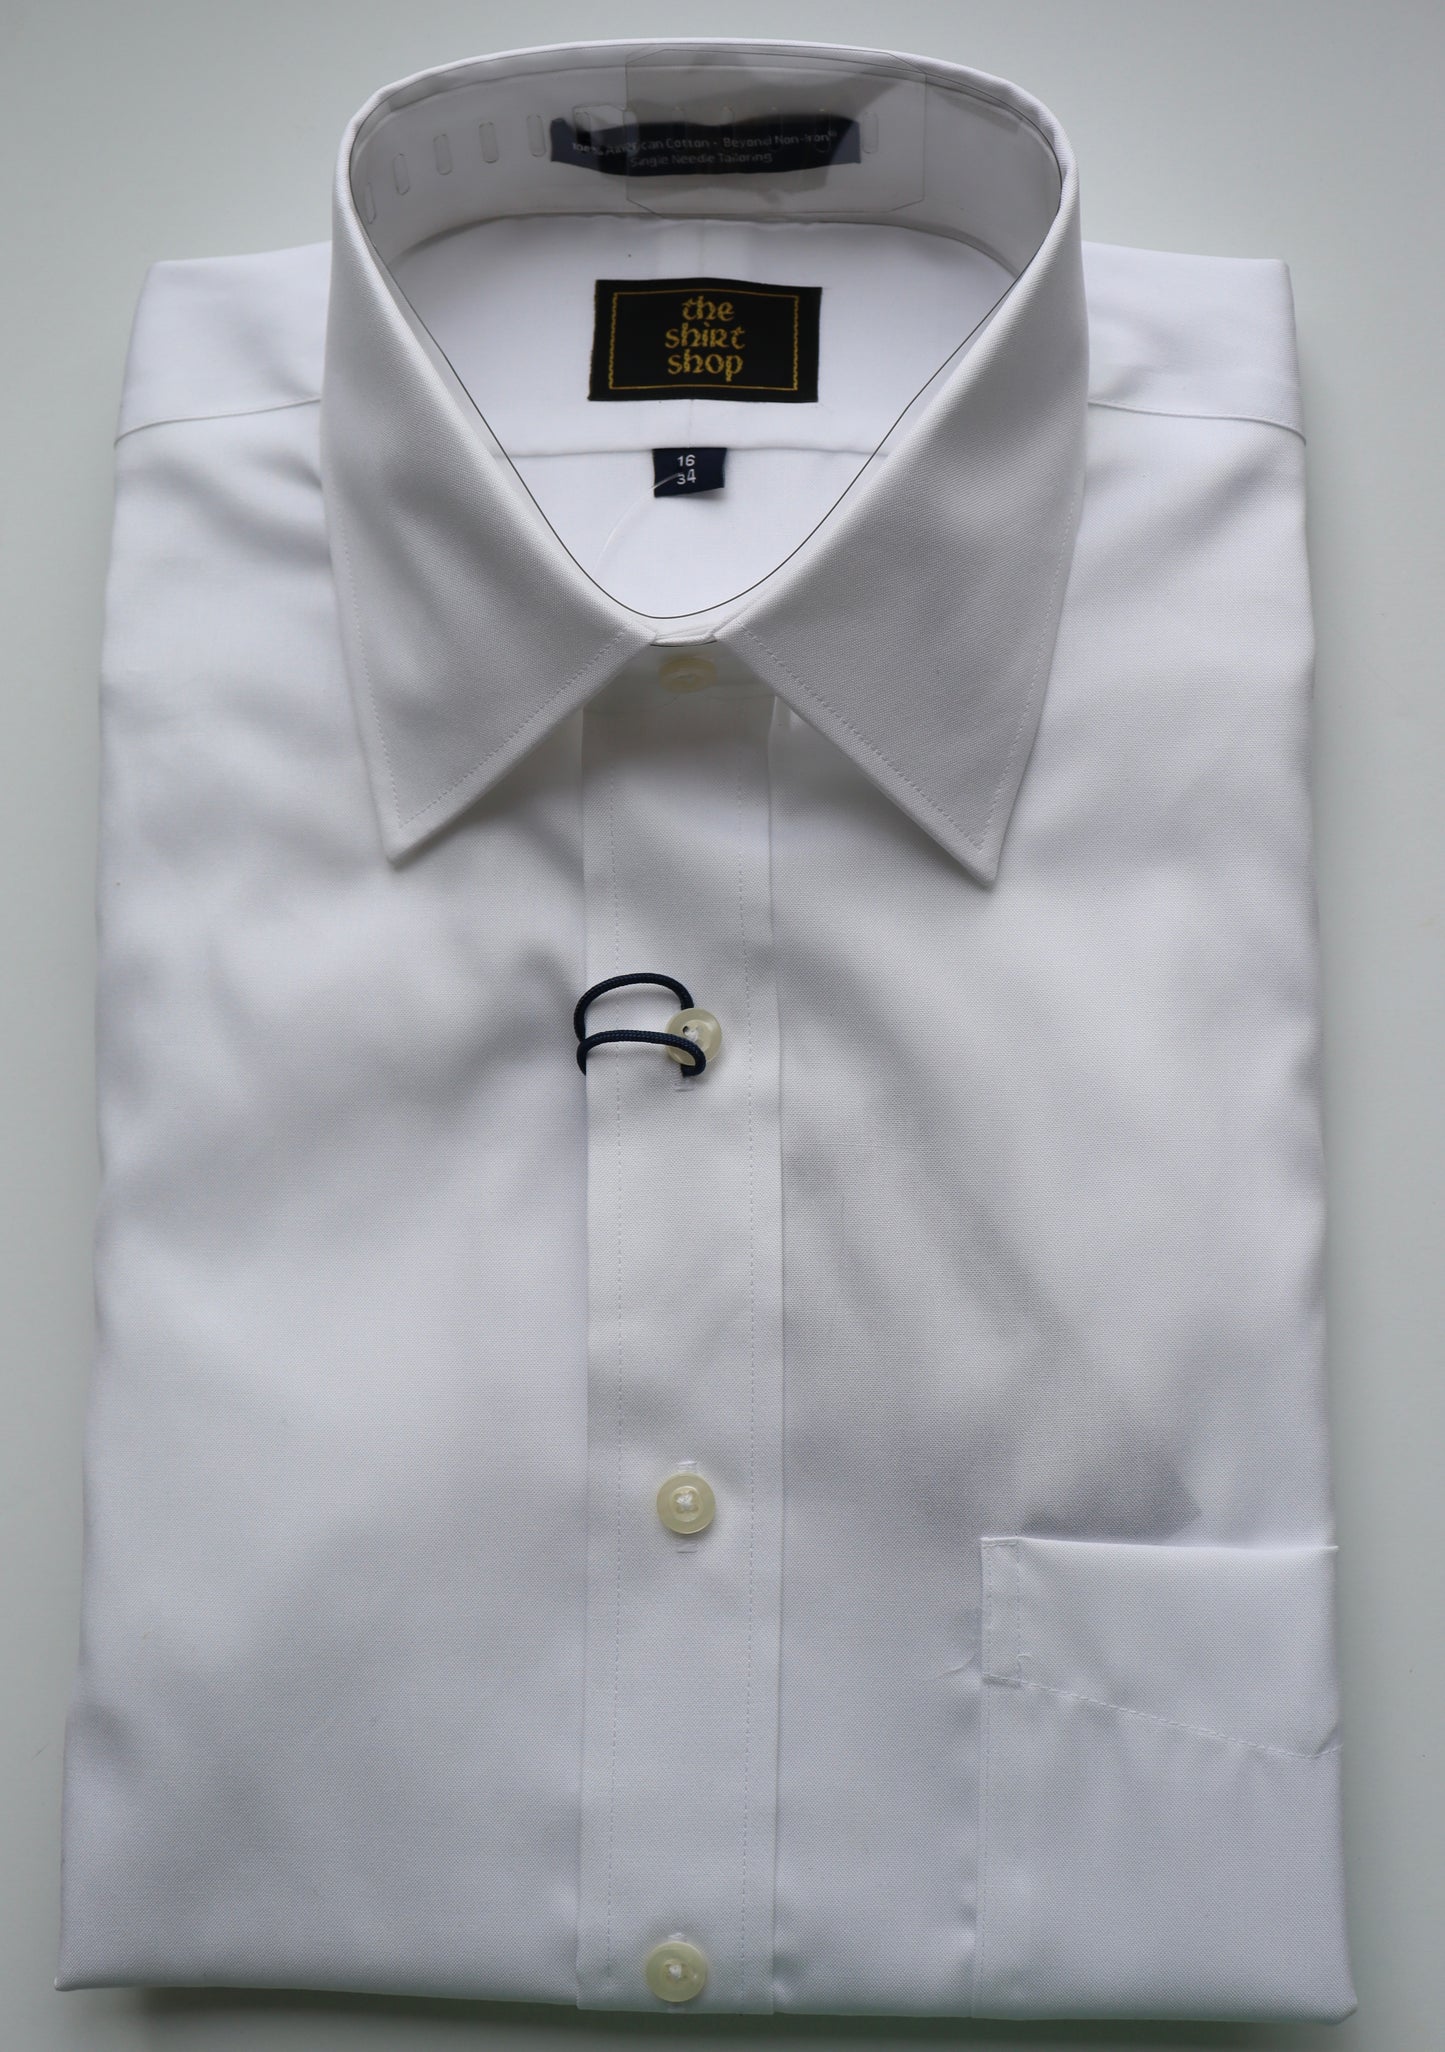 The Shirt Shop Dress Shirt - White Spread (Exact Sleeve Length)